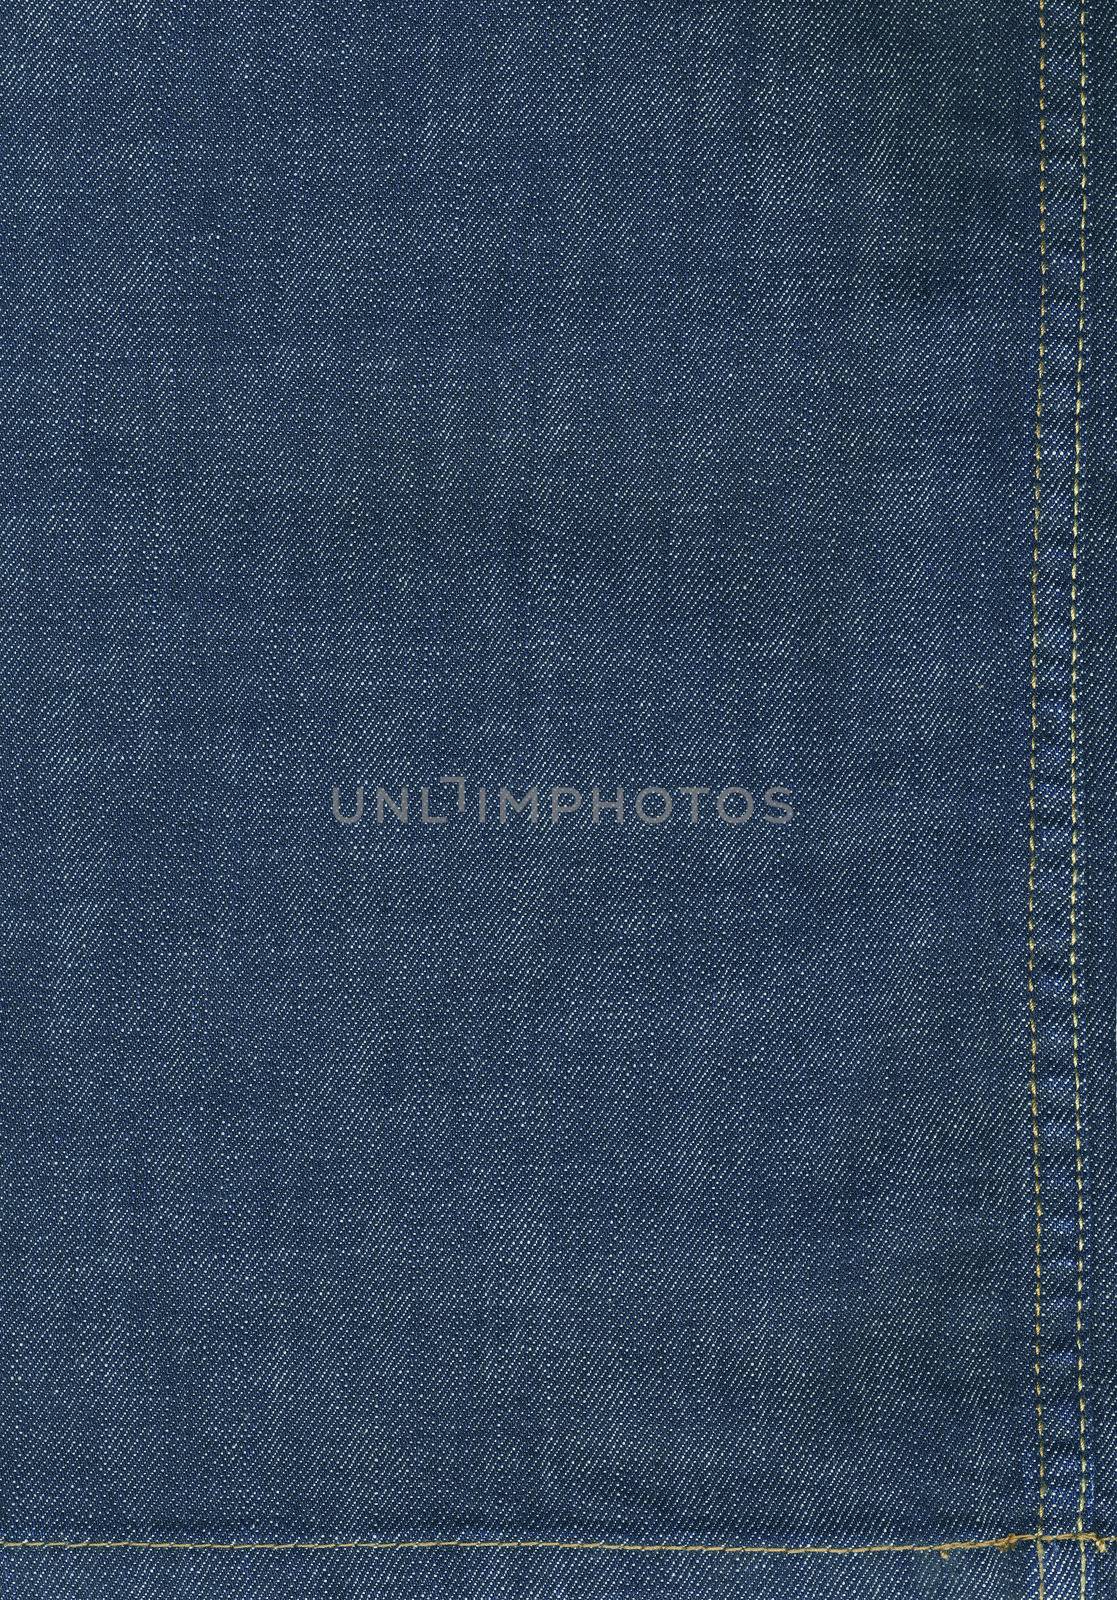 Flat background image of dark blue denim fabric with seams - large XXL high resolution image